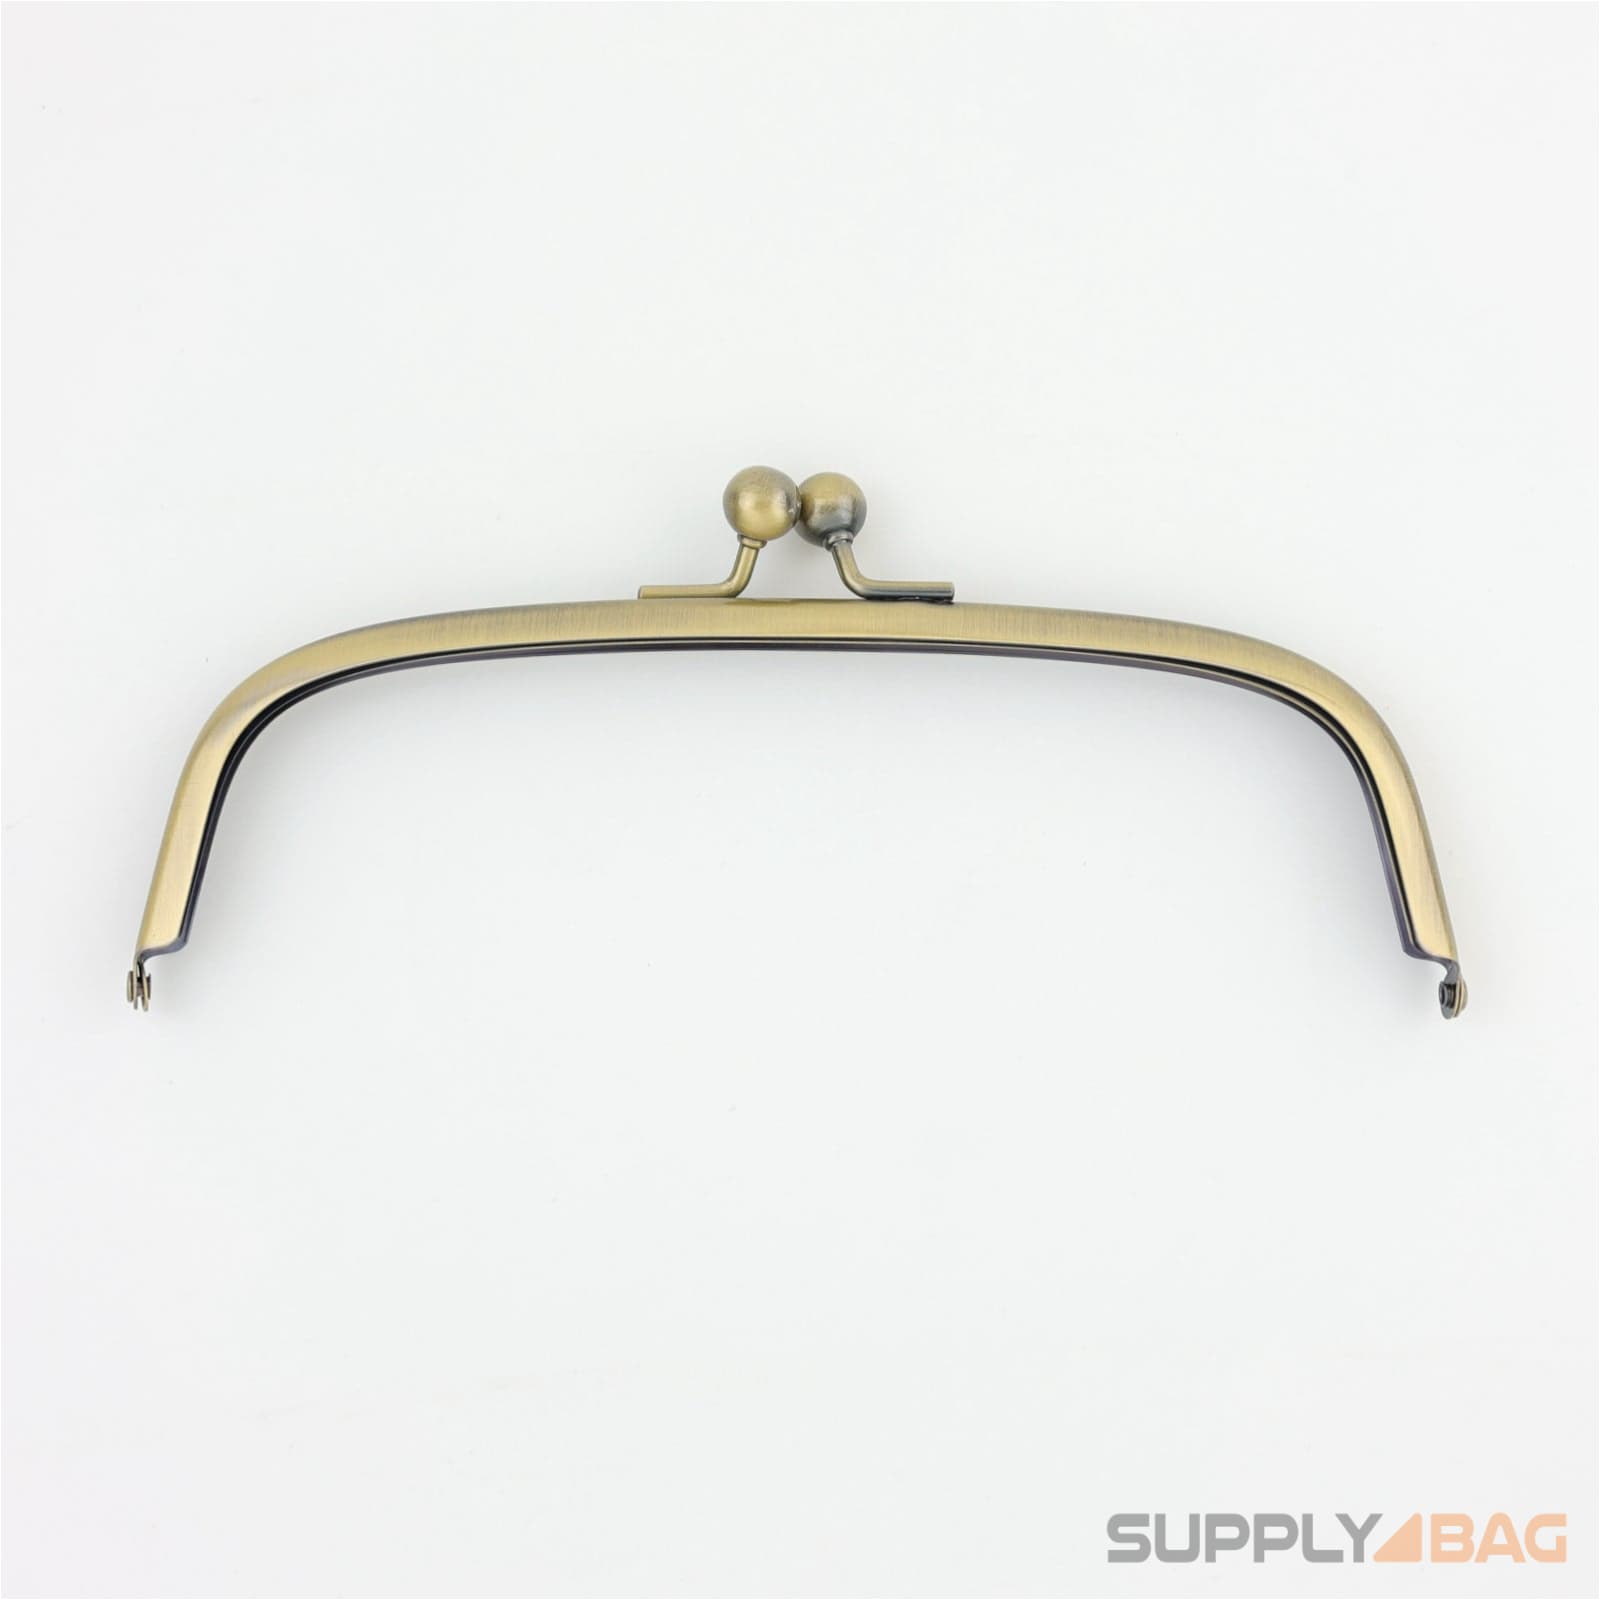 7 1/4 x 2 inch - antique brass arch shape metal purse frame